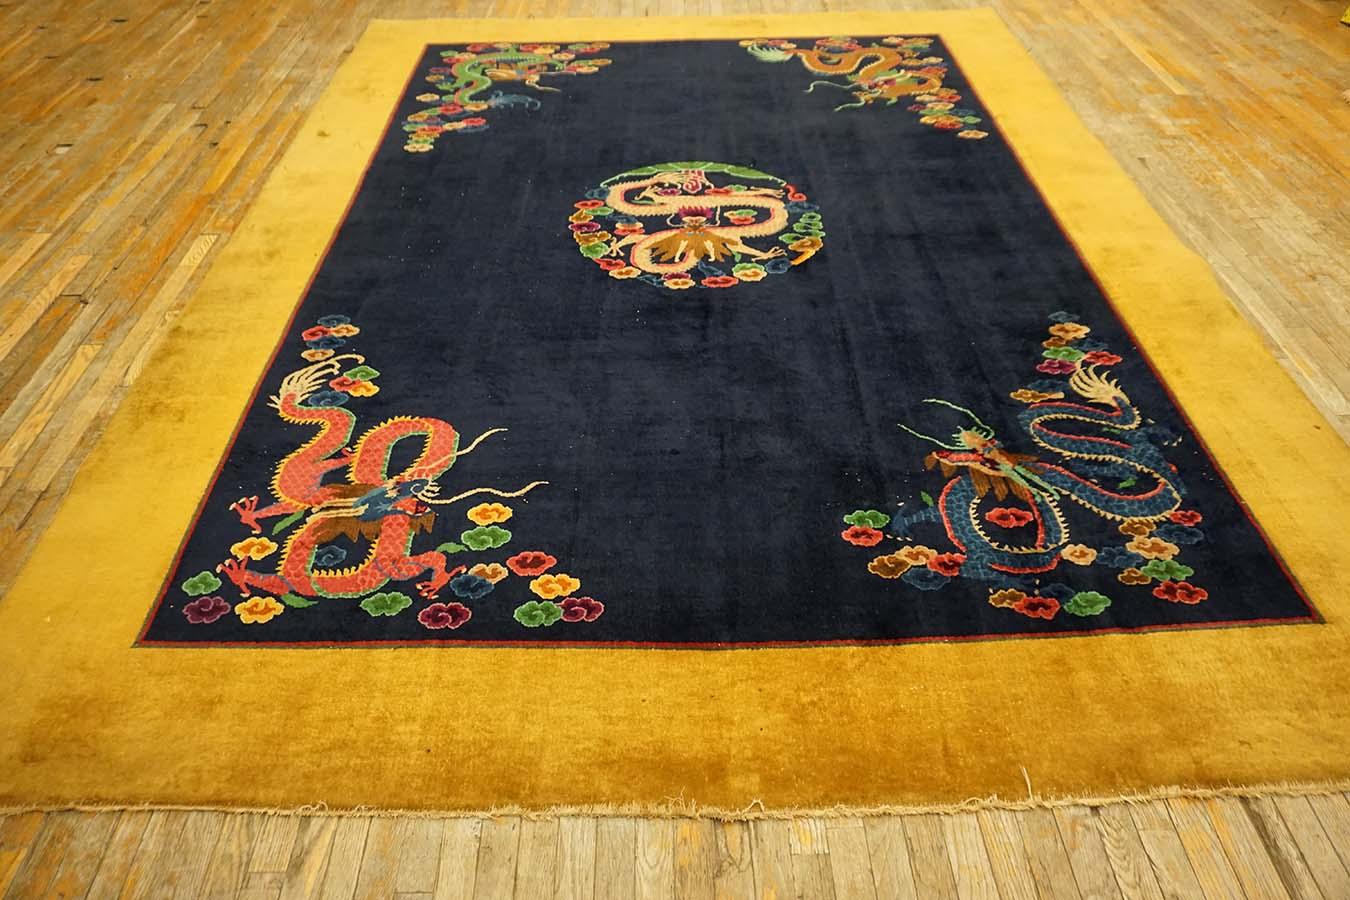 1920s Chinese Art Deco Carpet by Nichols Workshop (8'10'' x 11'6'' - 270 x 350) For Sale 2